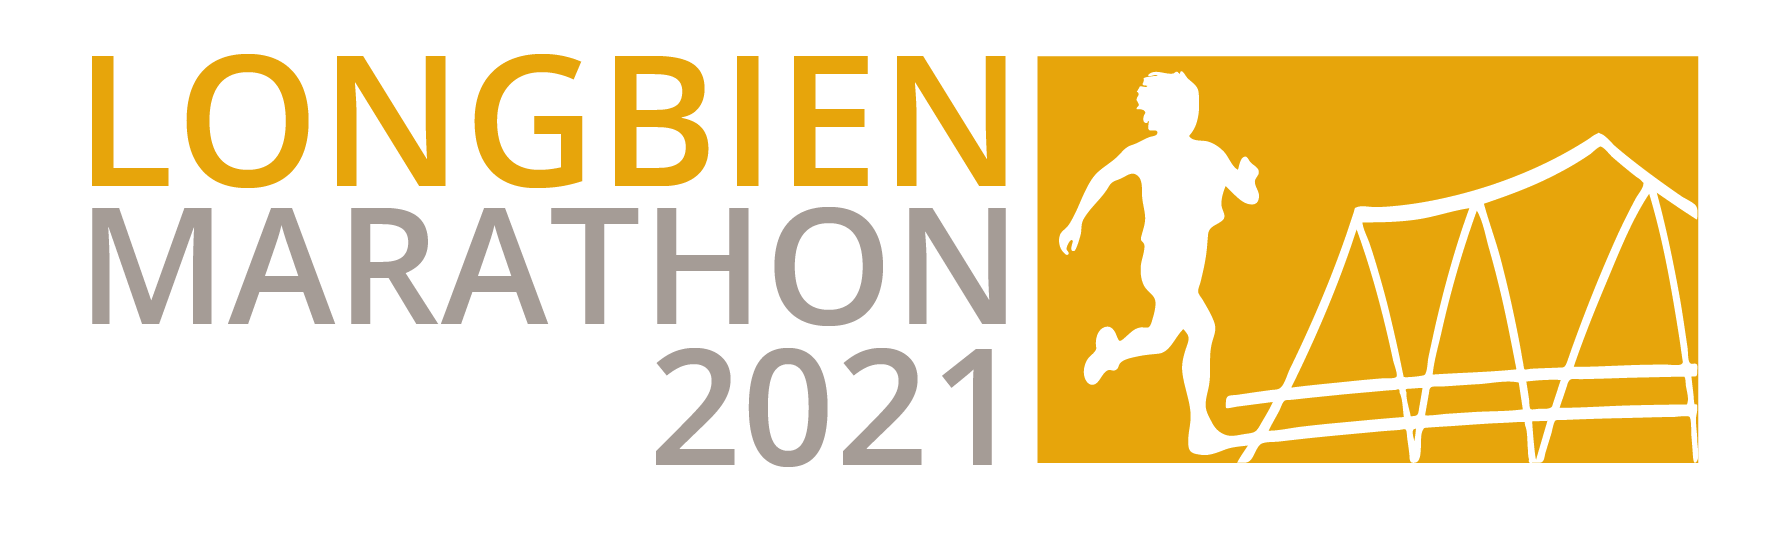 Longbien Marathon 2021 - 1st Ekiden Challenge